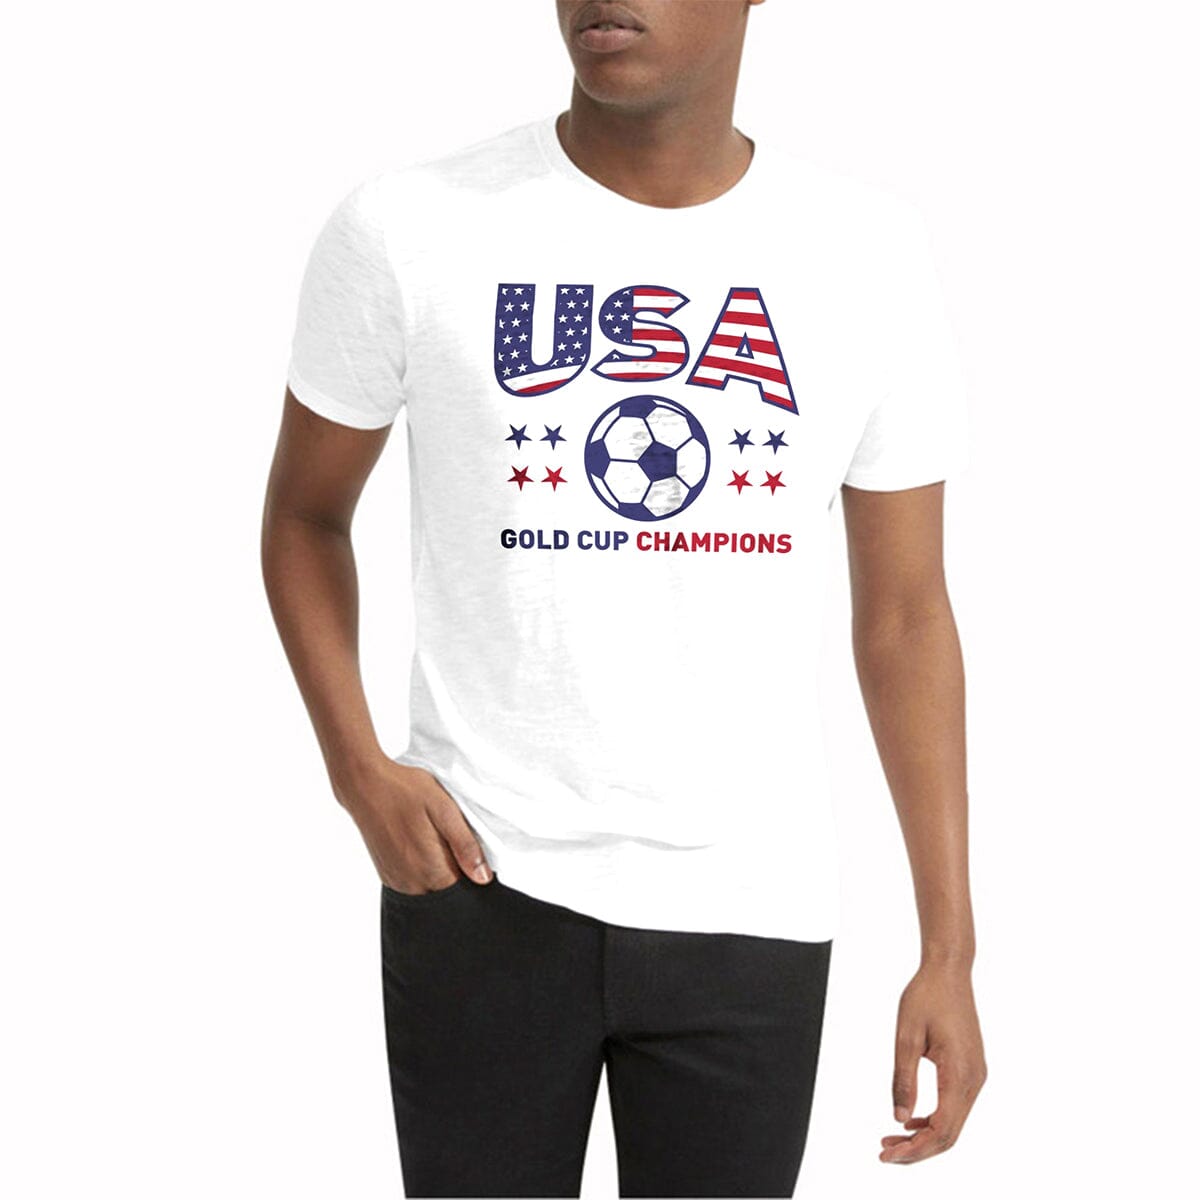 USA Gold Cup 2019 Champions Shirt T-shirts 411 Youth Medium White 